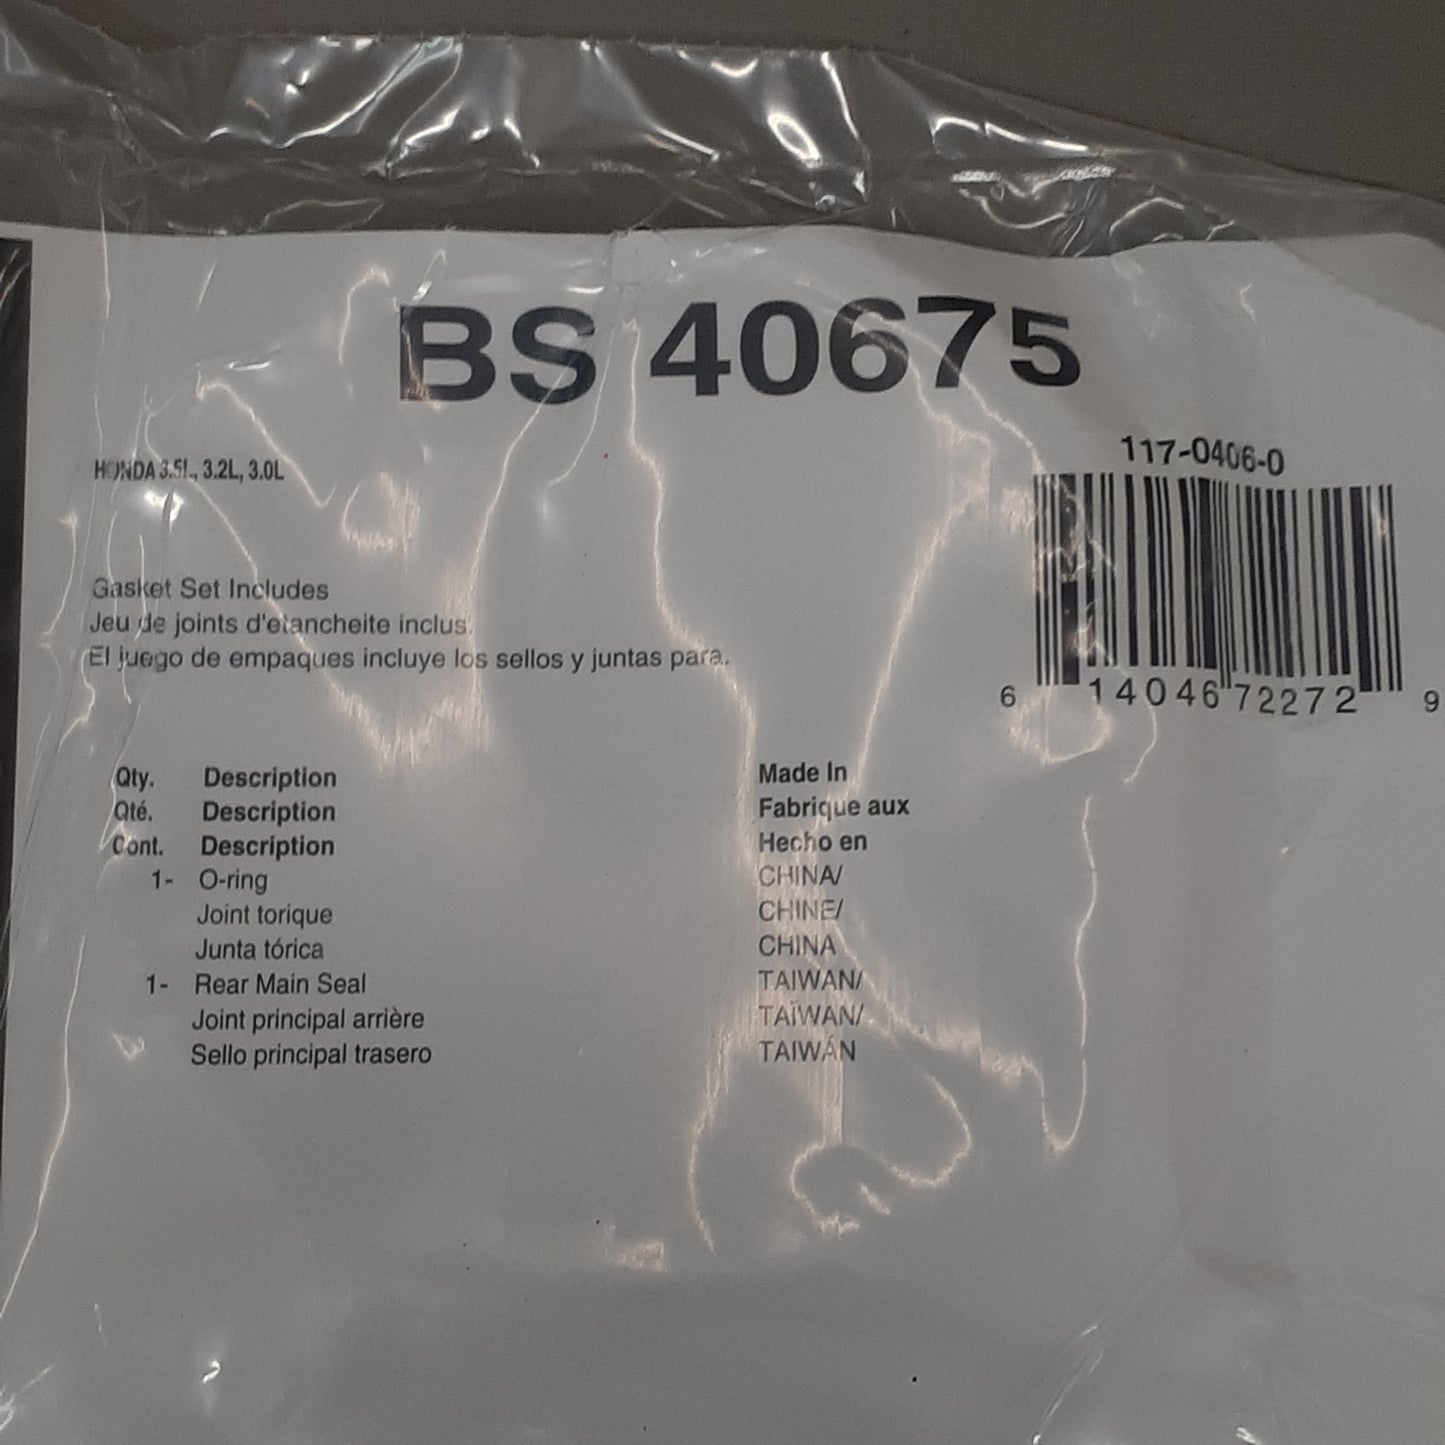 FEL-PRO Rear Main Seal Set BS40675 (New)